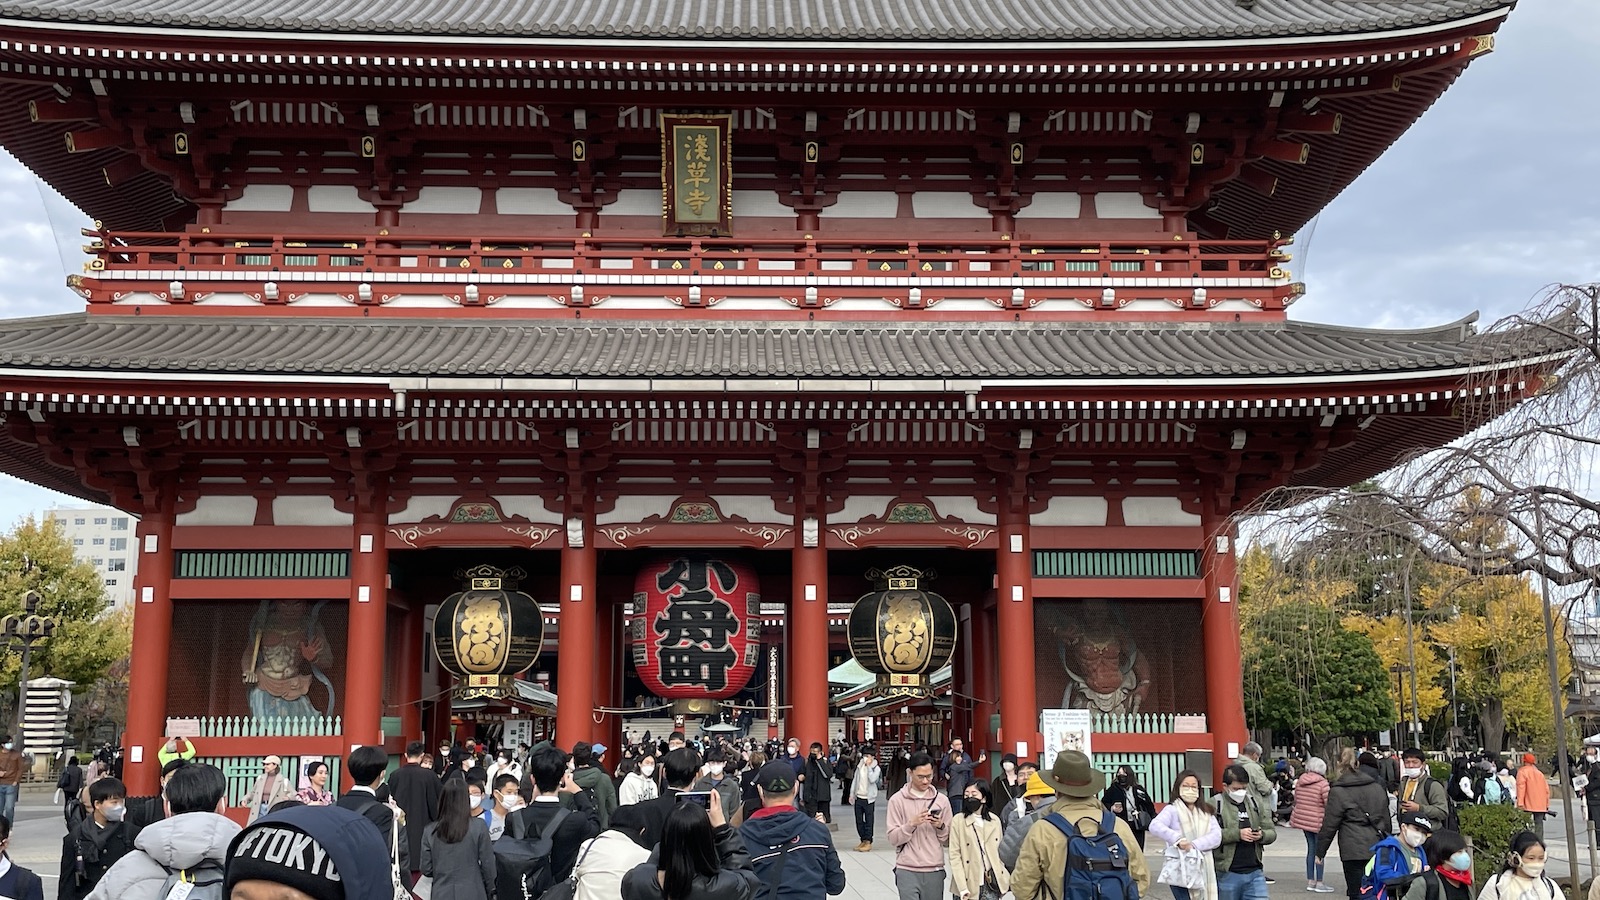 People in front of Sensoji Temple